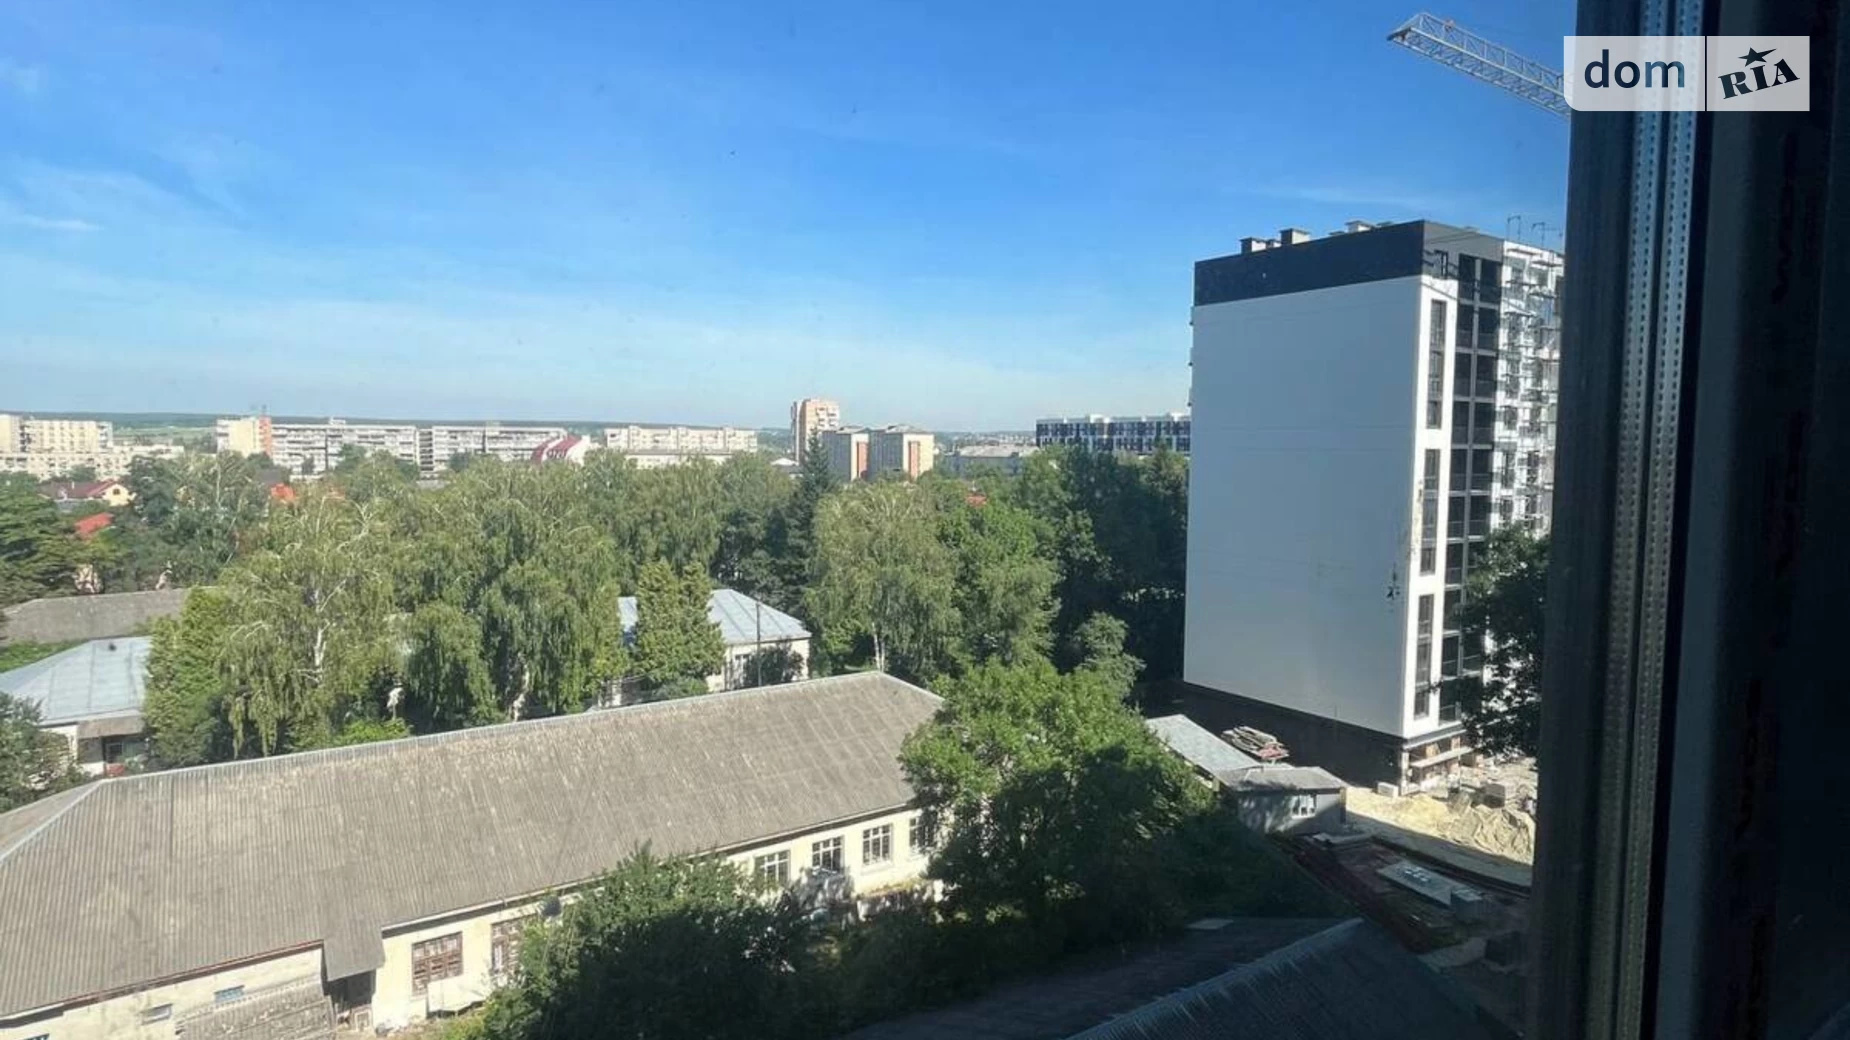 Продается 3-комнатная квартира 84.47 кв. м в Ивано-Франковске, ул. Ленкавского - фото 2